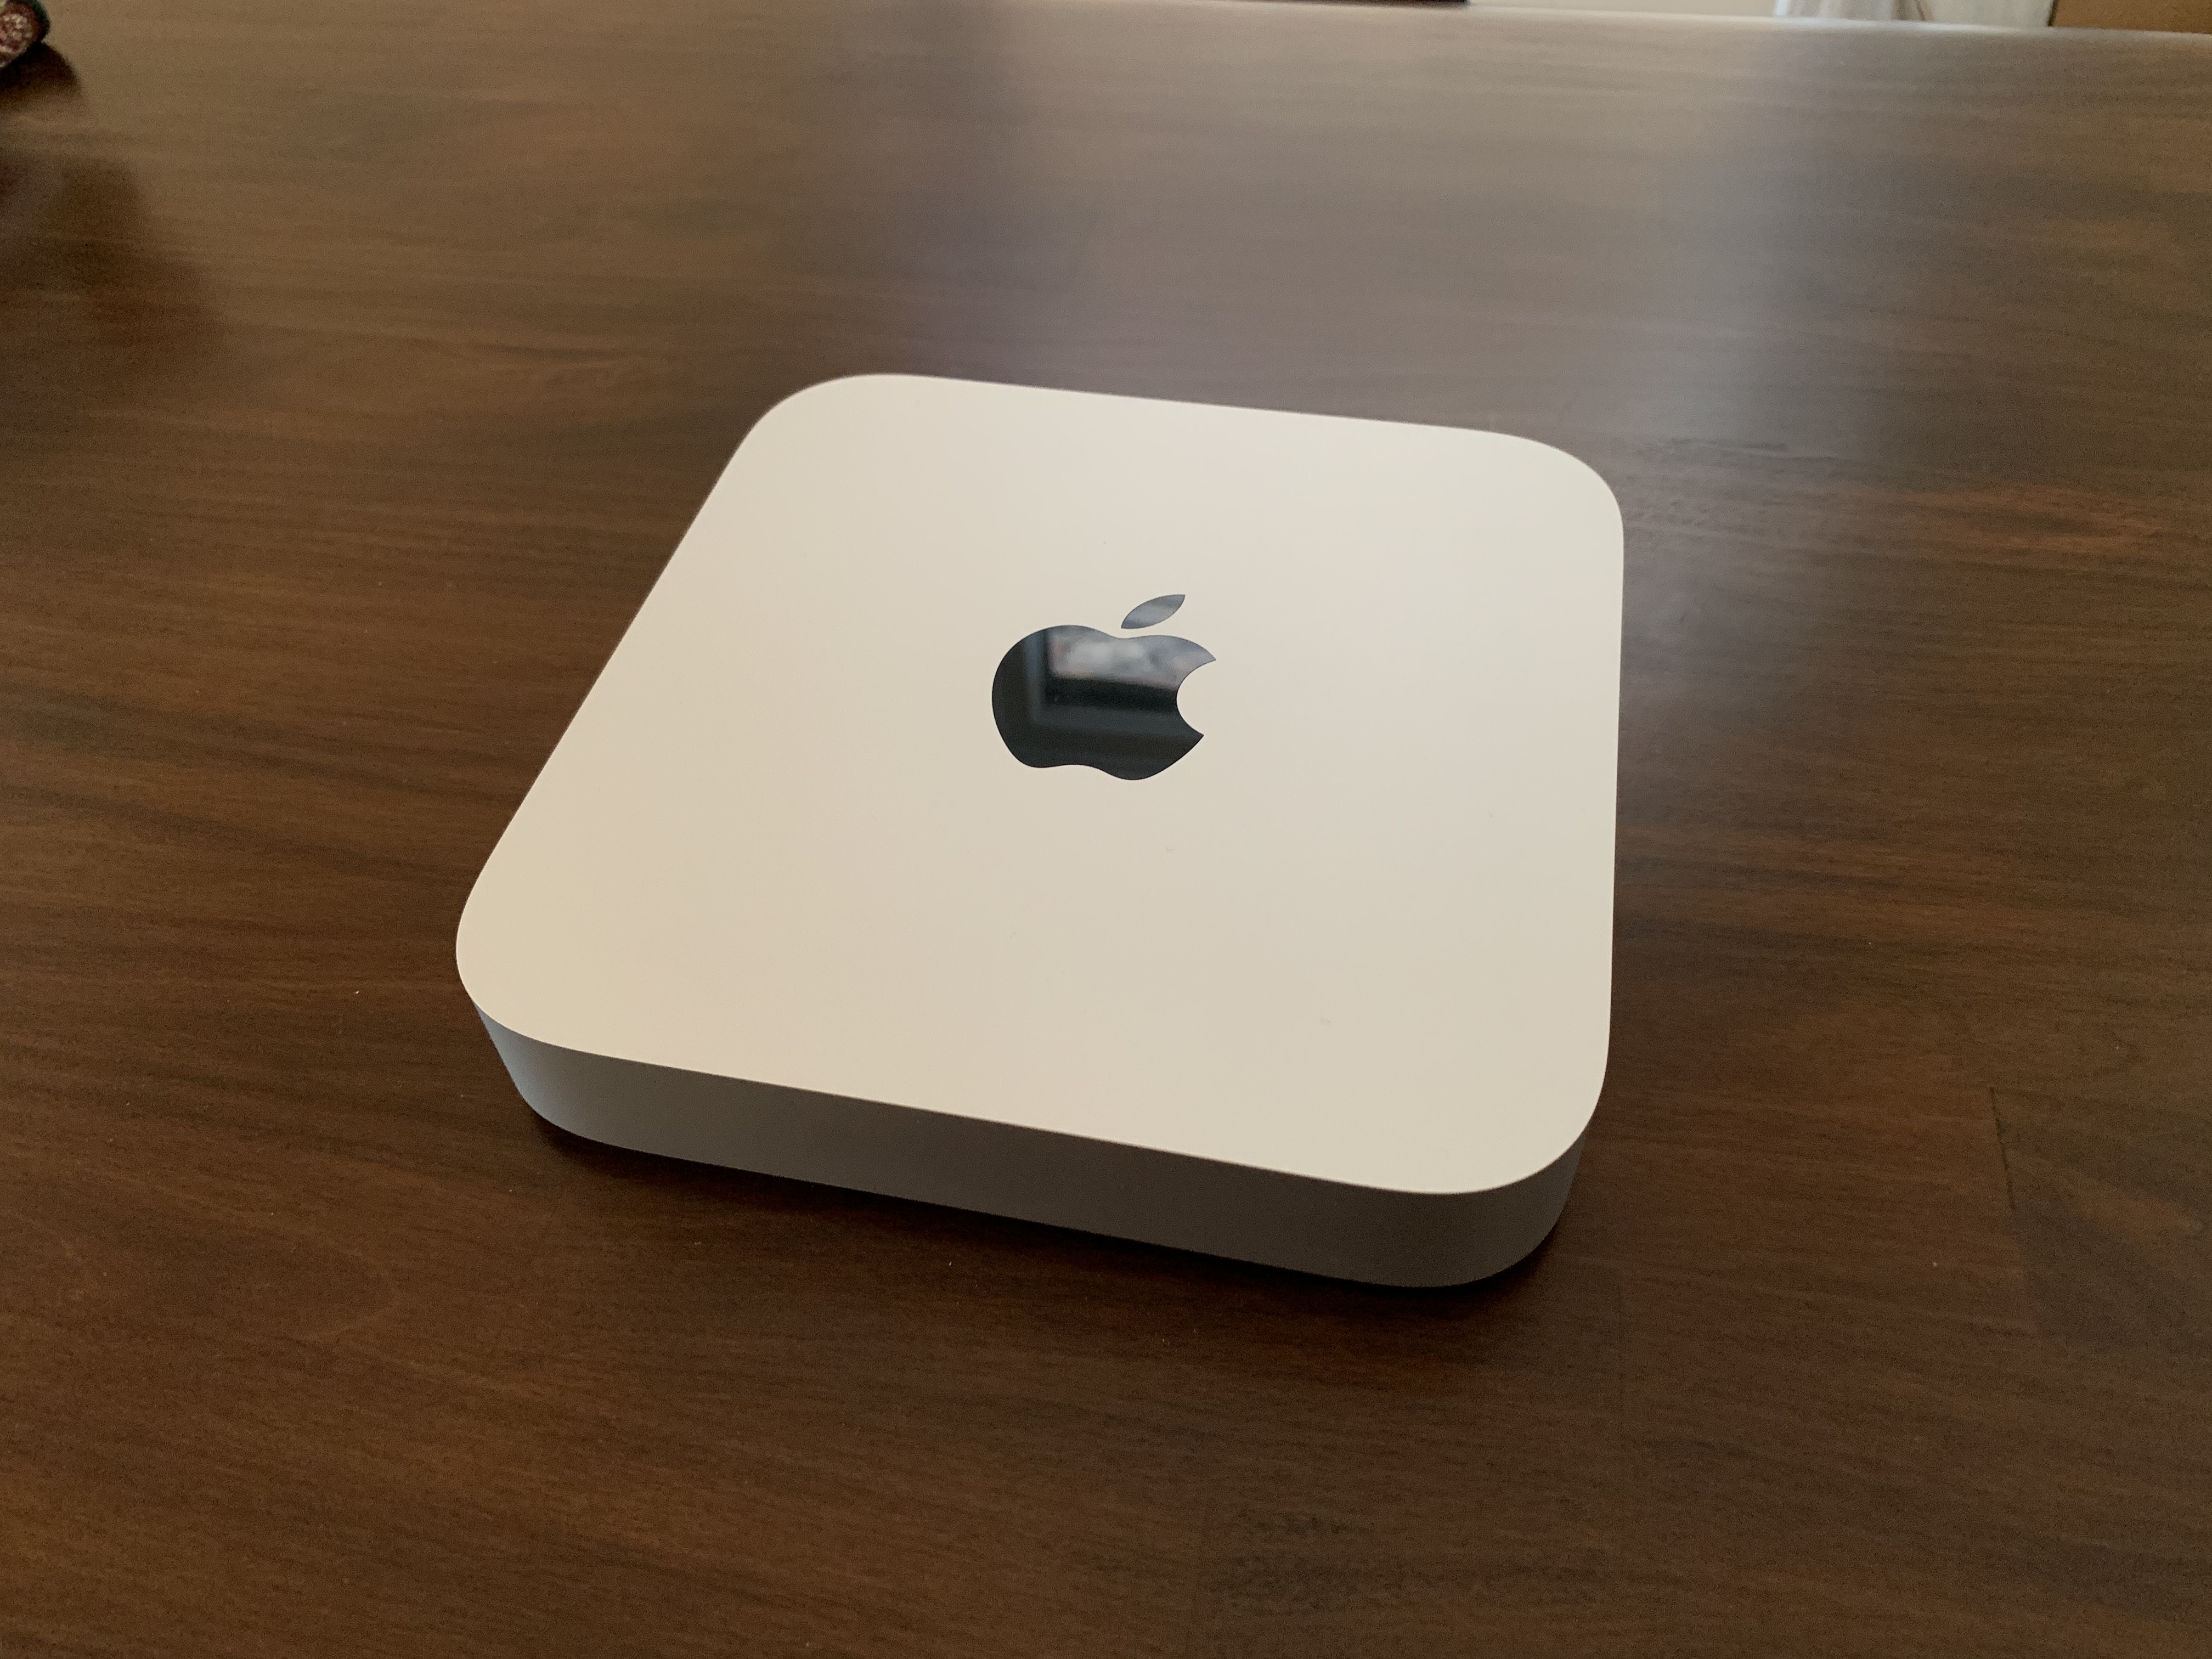 The 2020, M1-equipped Apple Mac mini.